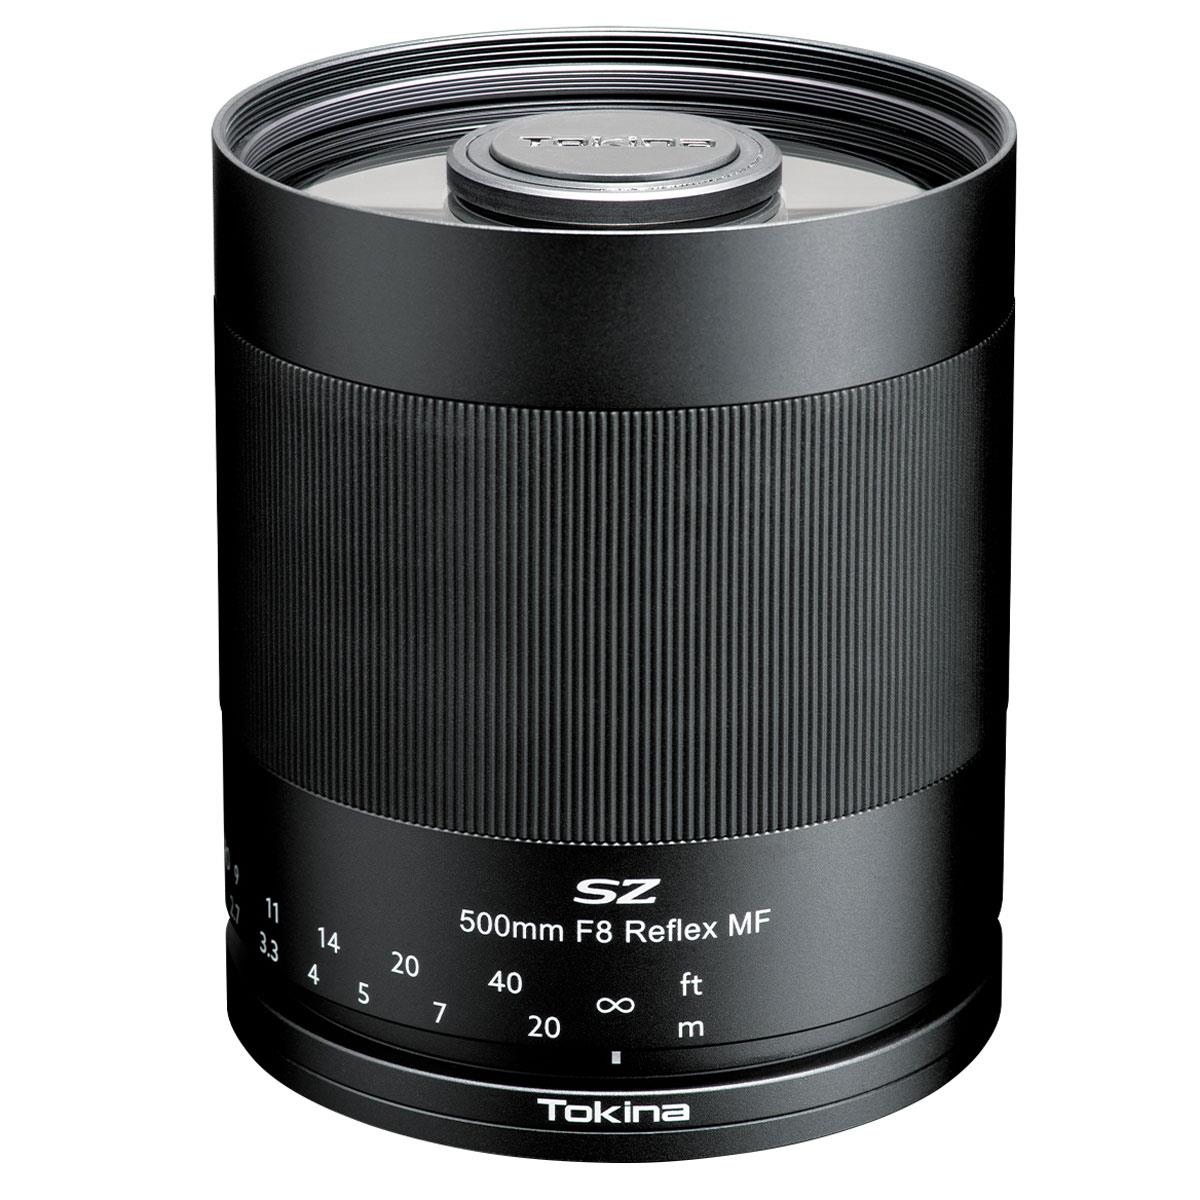 Image of Tokina SZ 500mm f/8 Reflex MF Lens for Canon EF